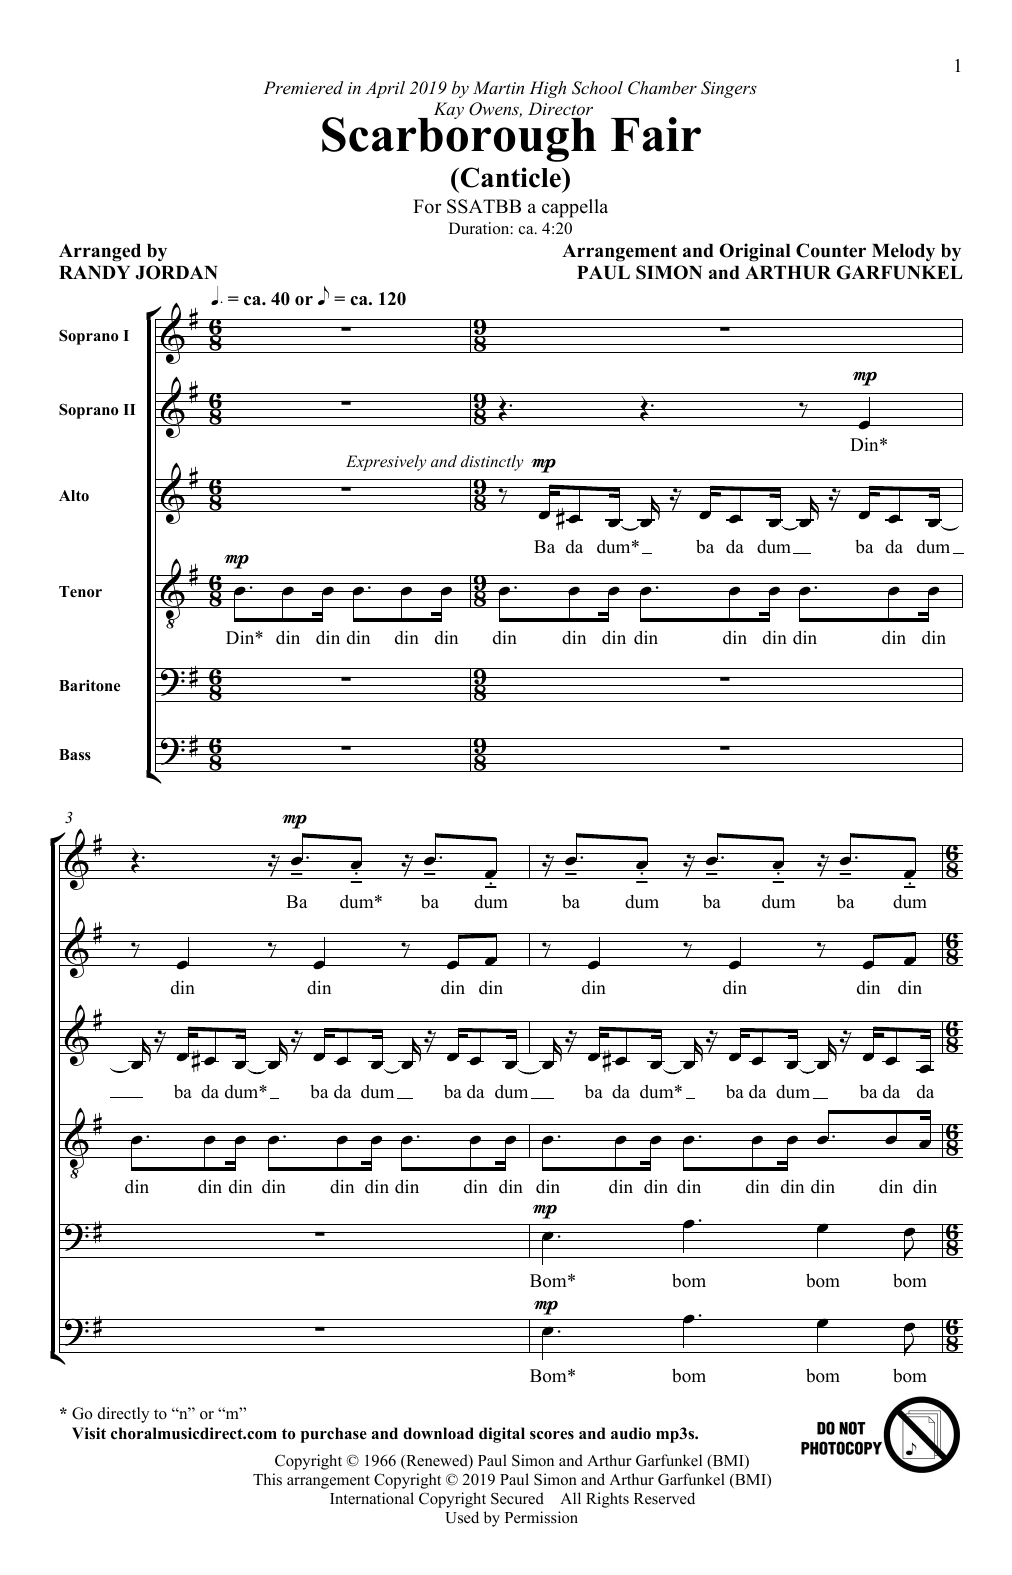 Download Simon & Garfunkel Scarborough Fair/Canticle (arr. Randy Jordan) Sheet Music and learn how to play SSATBB Choir PDF digital score in minutes